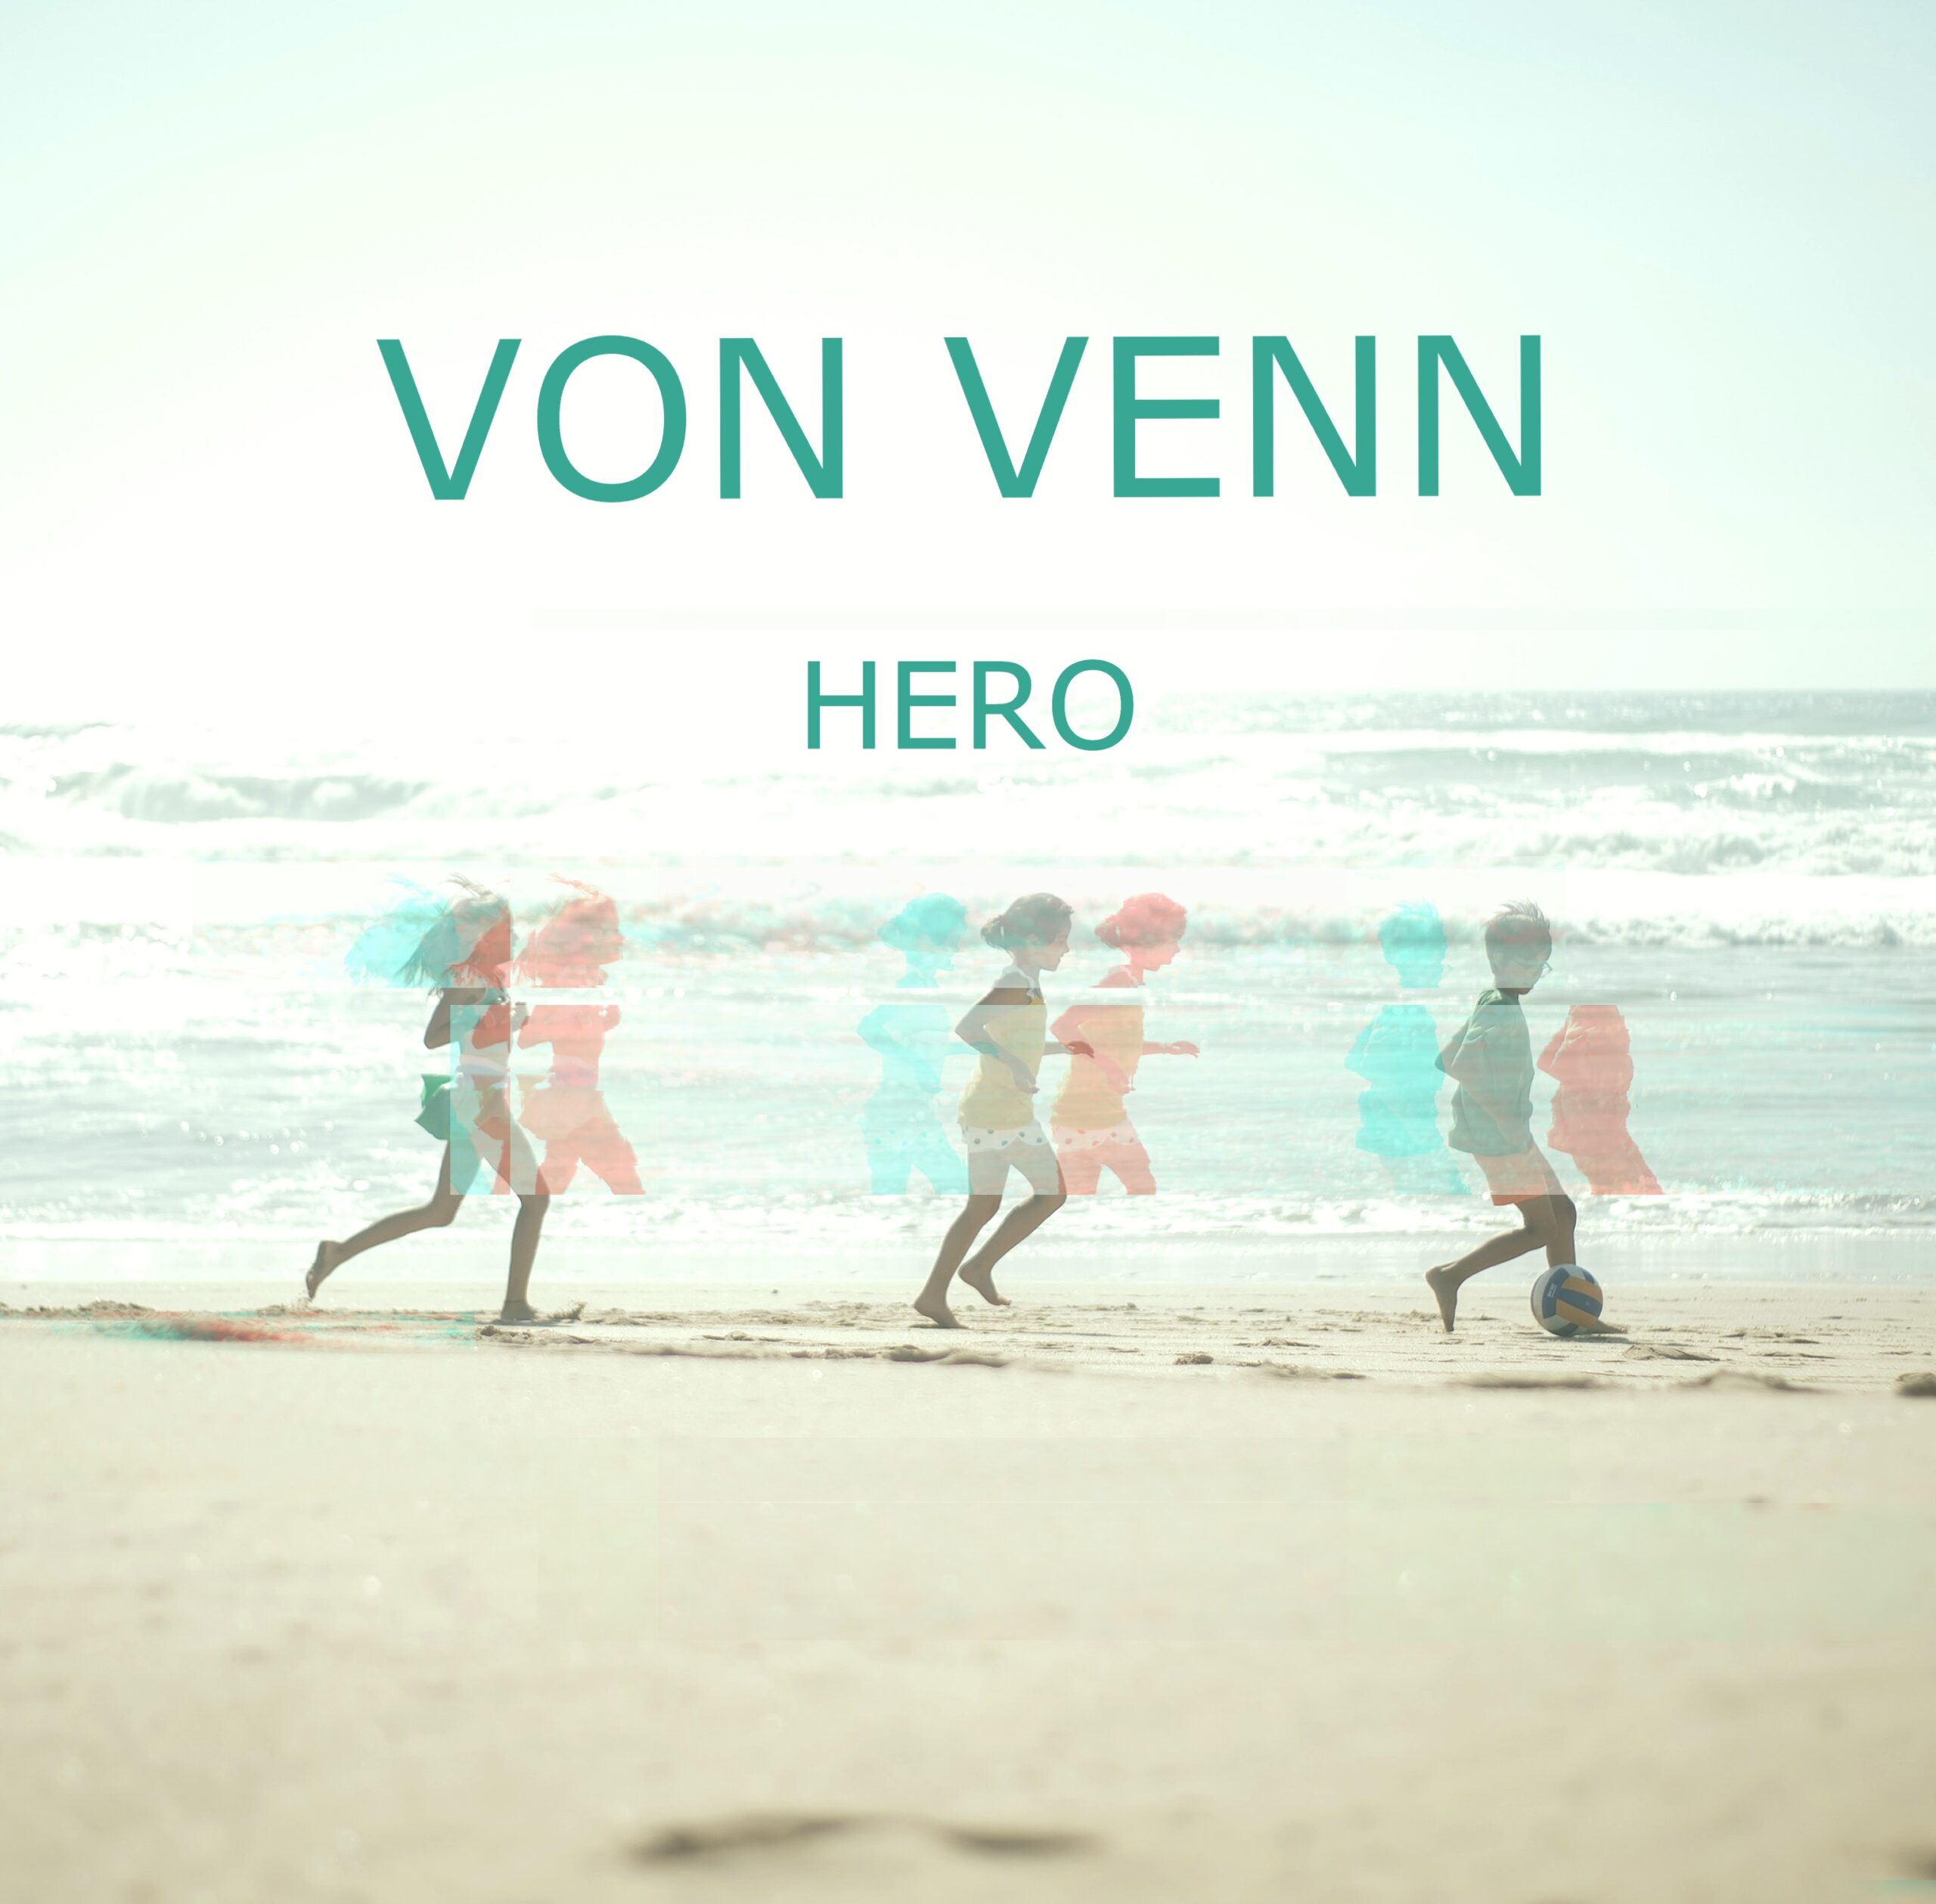 Von Venn Unleash New Track, ‘Hero’